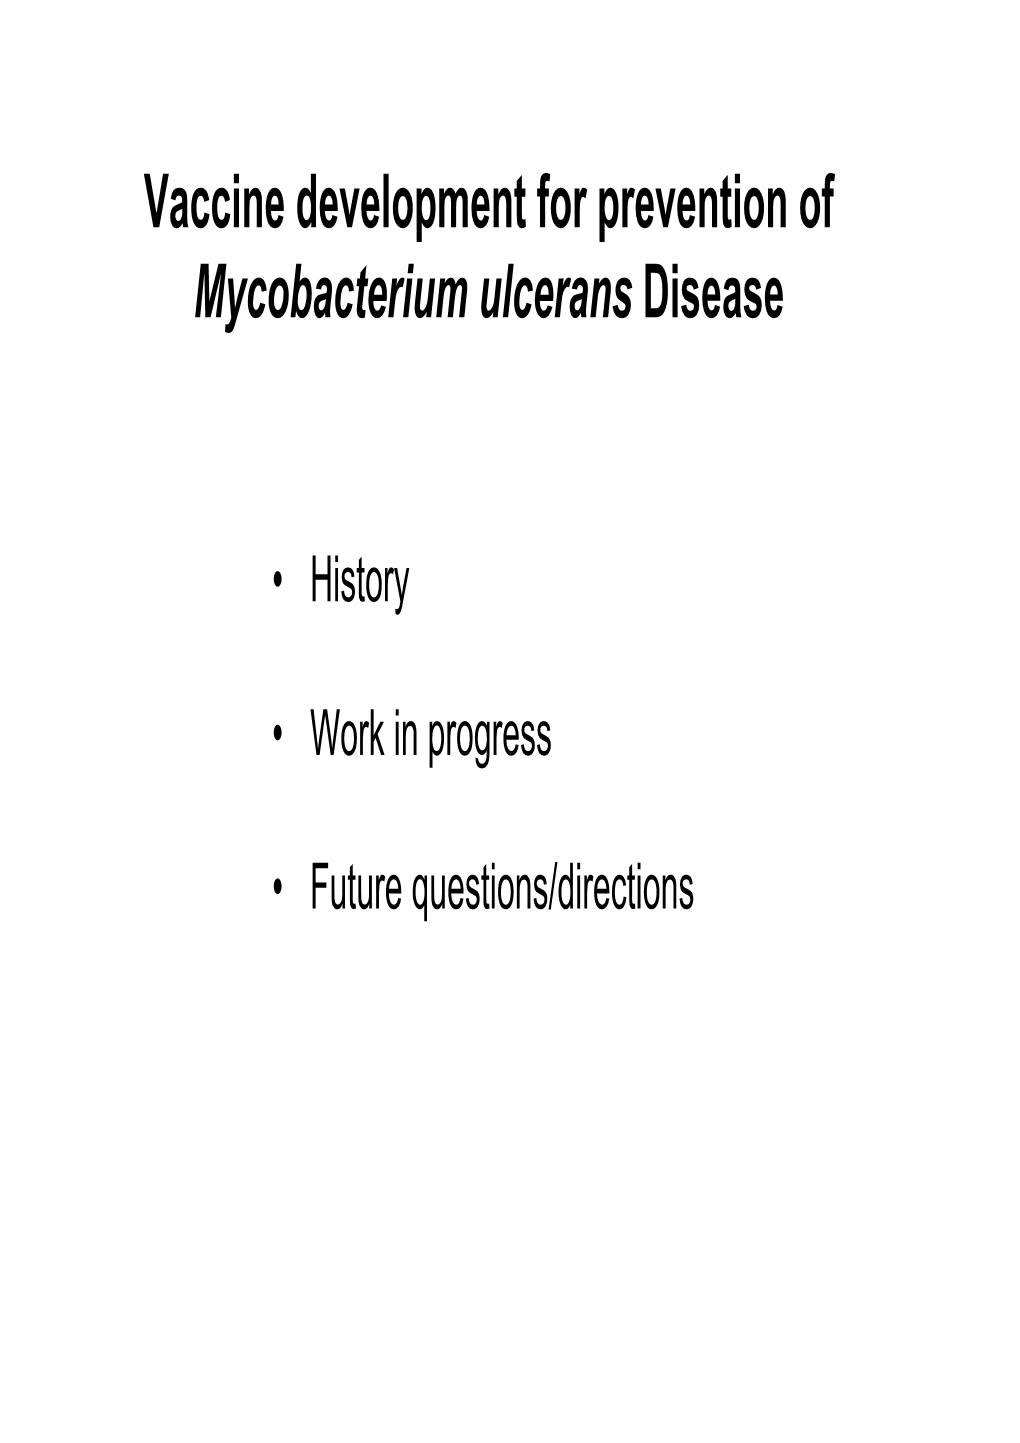 Vaccine Development for Prevention of Mycobacterium Ulcerans Disease